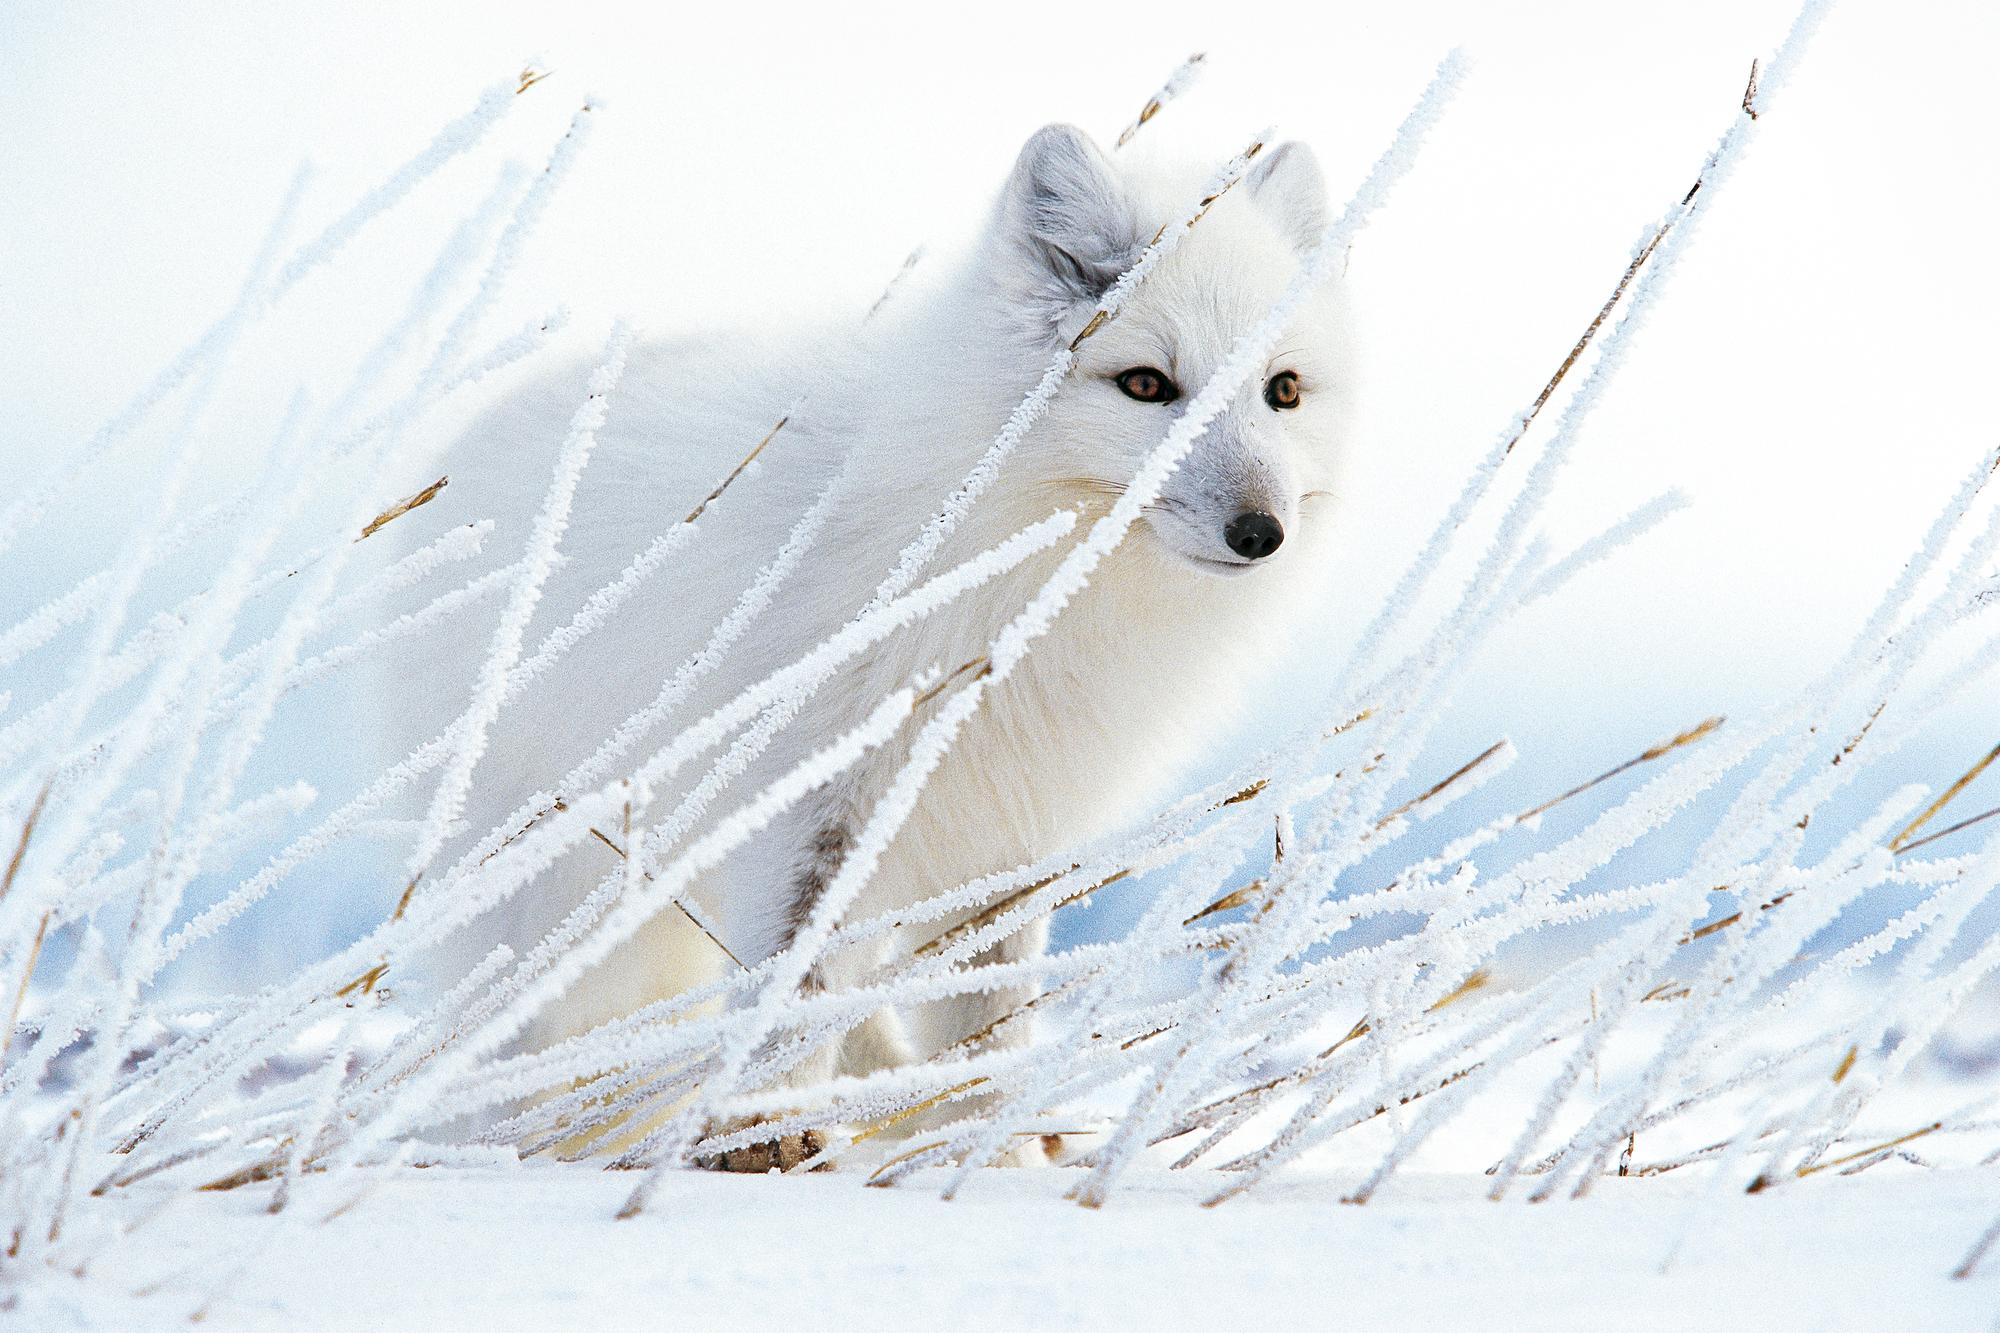 Arctic Ghost
Nunavut, Canada, 1997.

24 x 36 in / 61 x 91.4 cm / Edition of 20 - $3,500
31 x 46.5 in / 78.7 x 118.1 cm / Edition of 15
40 × 60 in / 101.6 x 152.4 cm / Edition of 10

"Wearing its beautiful winter coat, an Arctic fox stalks its prey.